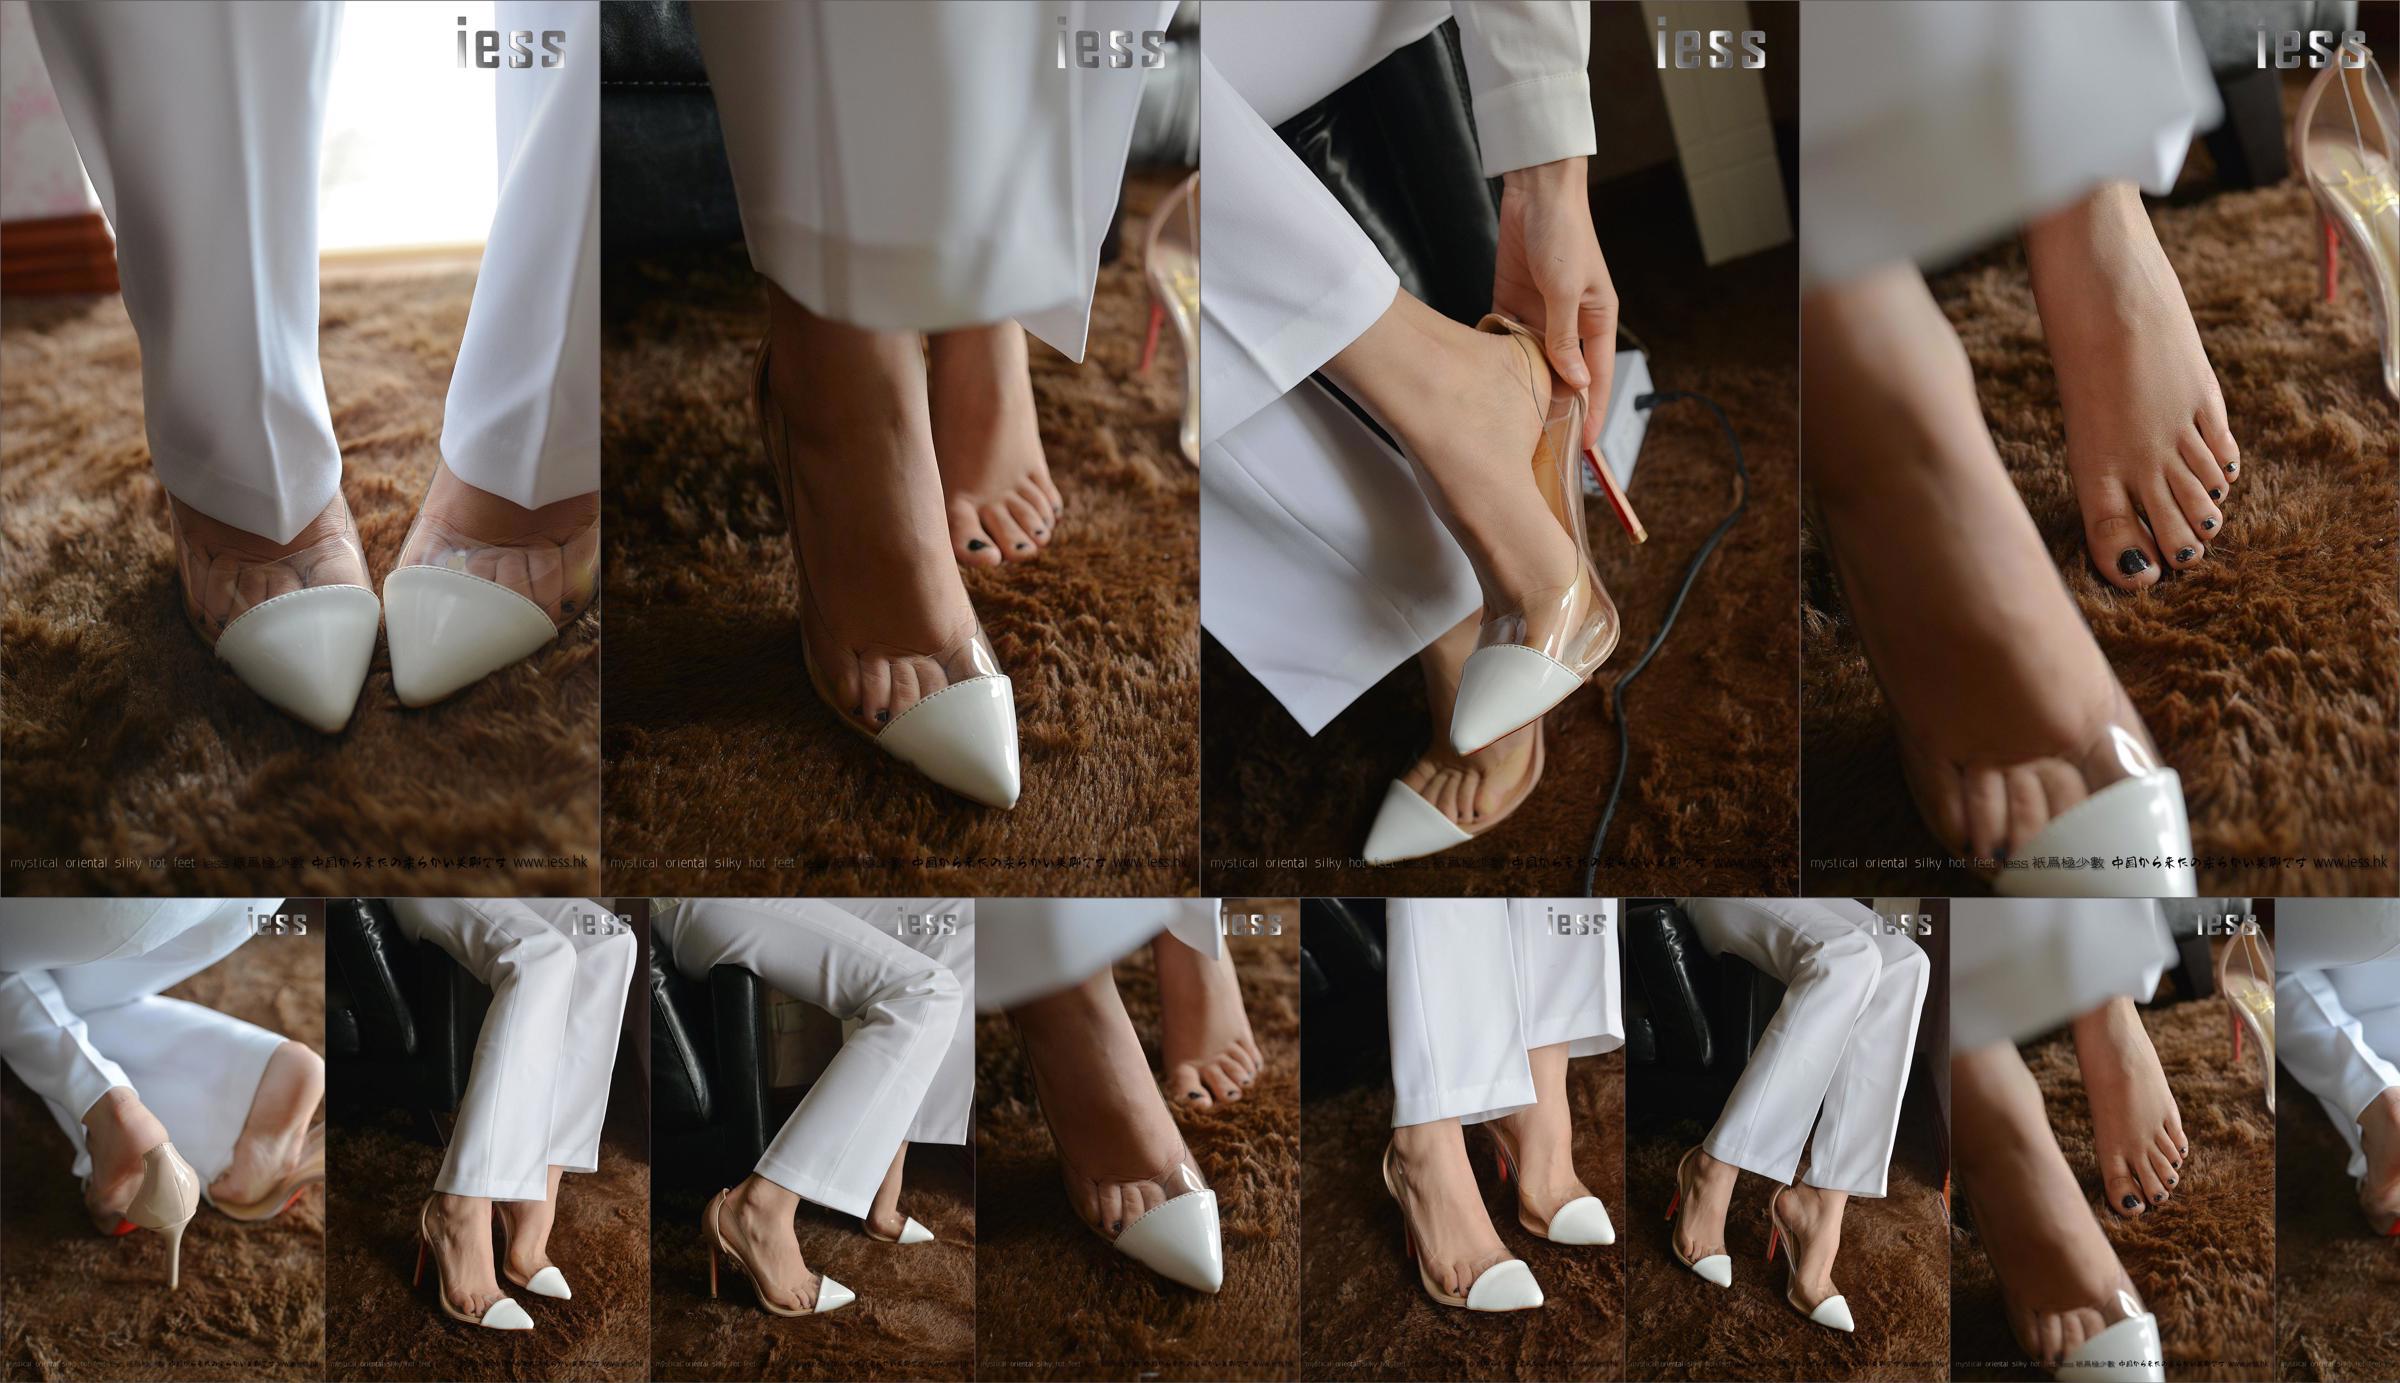 Silky Foot Bento 058 Suspense "Collection-Bare Foot High Heels" [IESS Wei Si Fun Xiang] No.494b56 Halaman 1